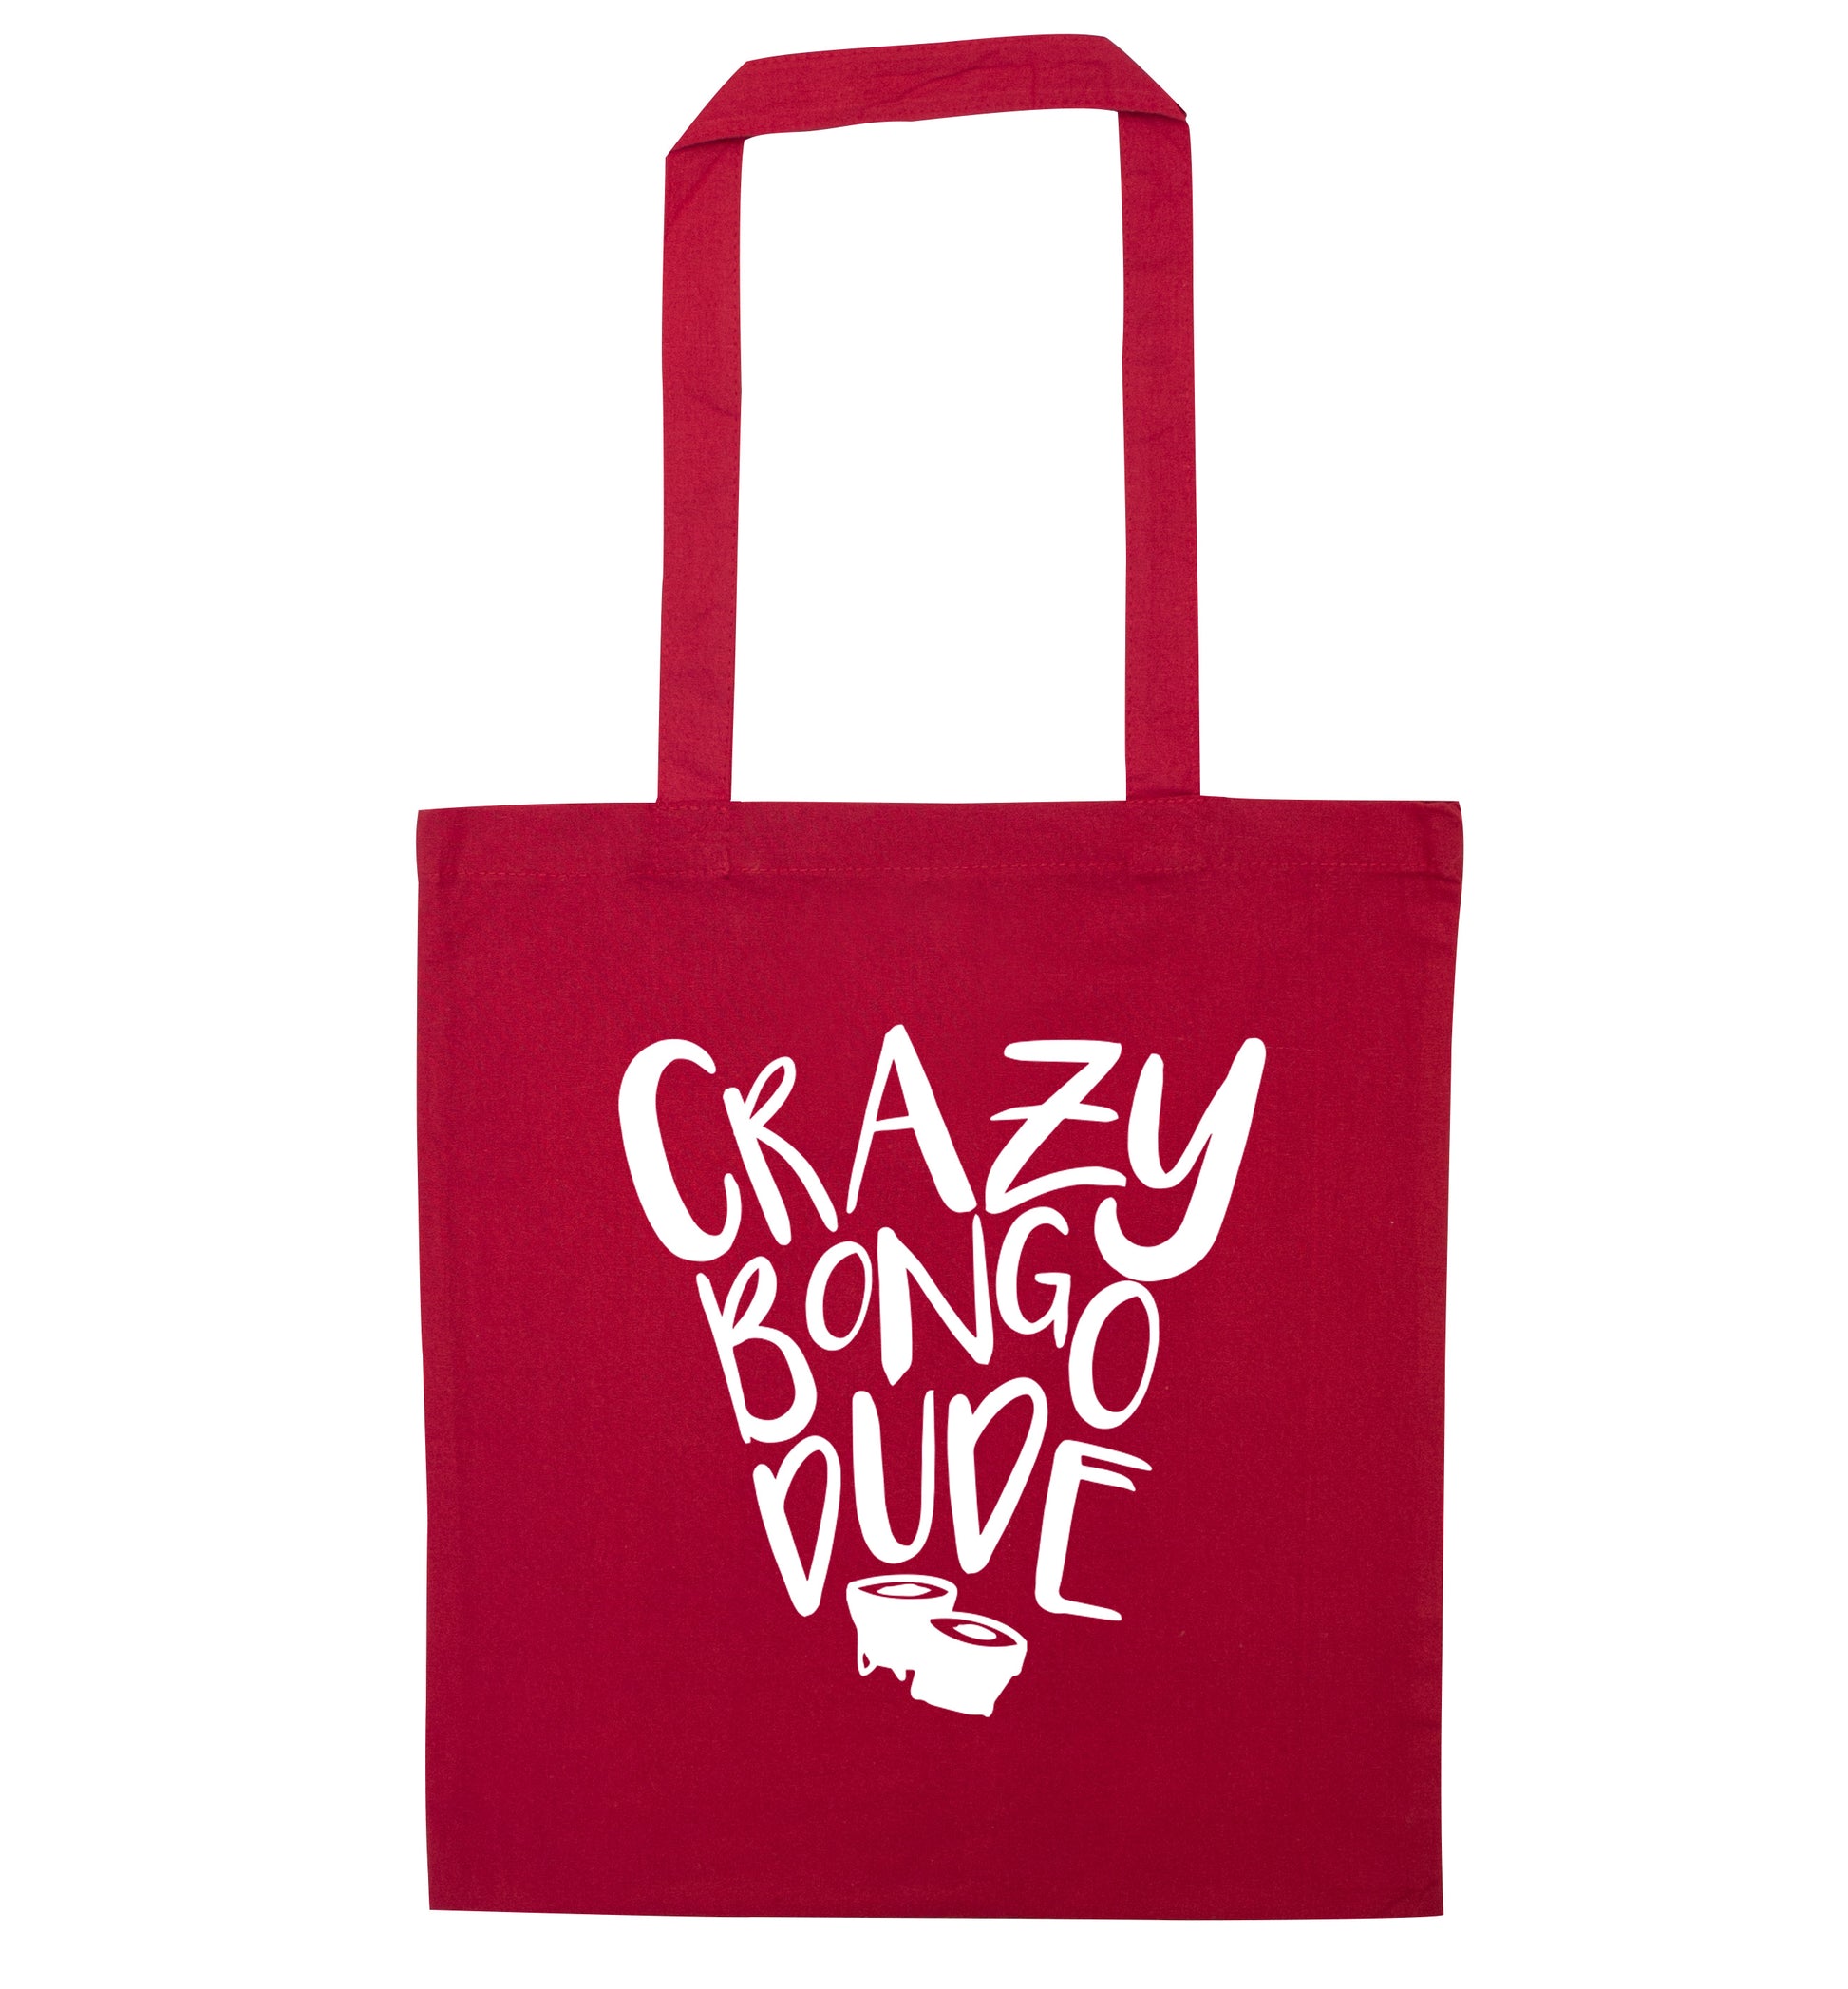 Crazy bongo dude red tote bag